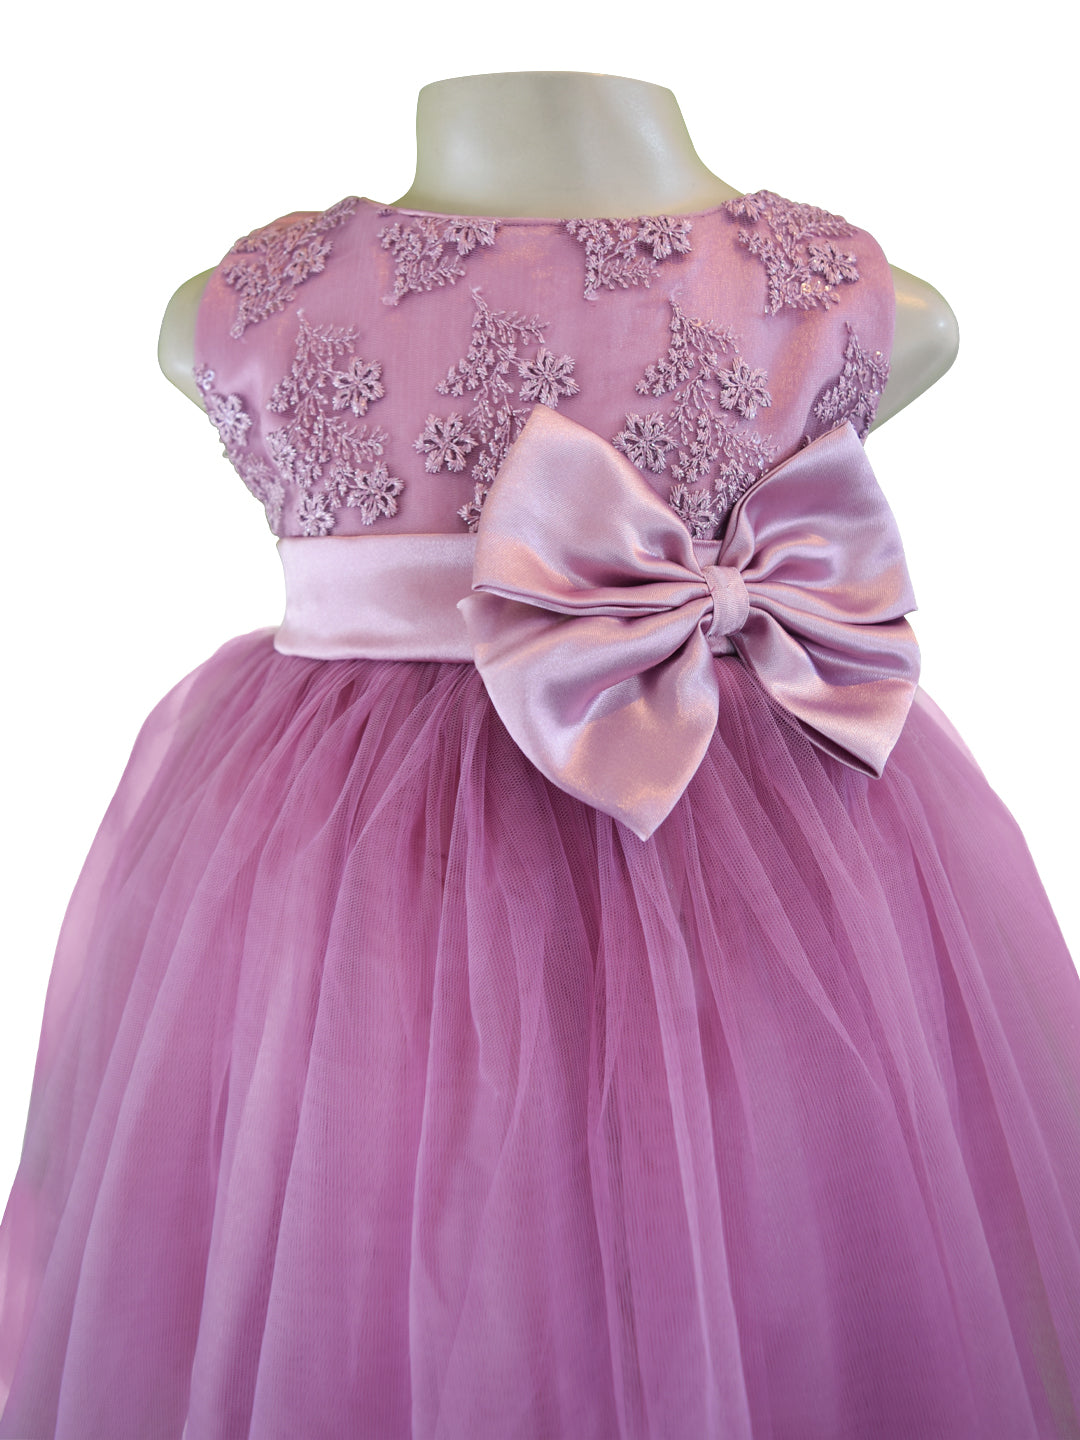 5 Cute Birthday Dresses from Lulus - Emma's Edition